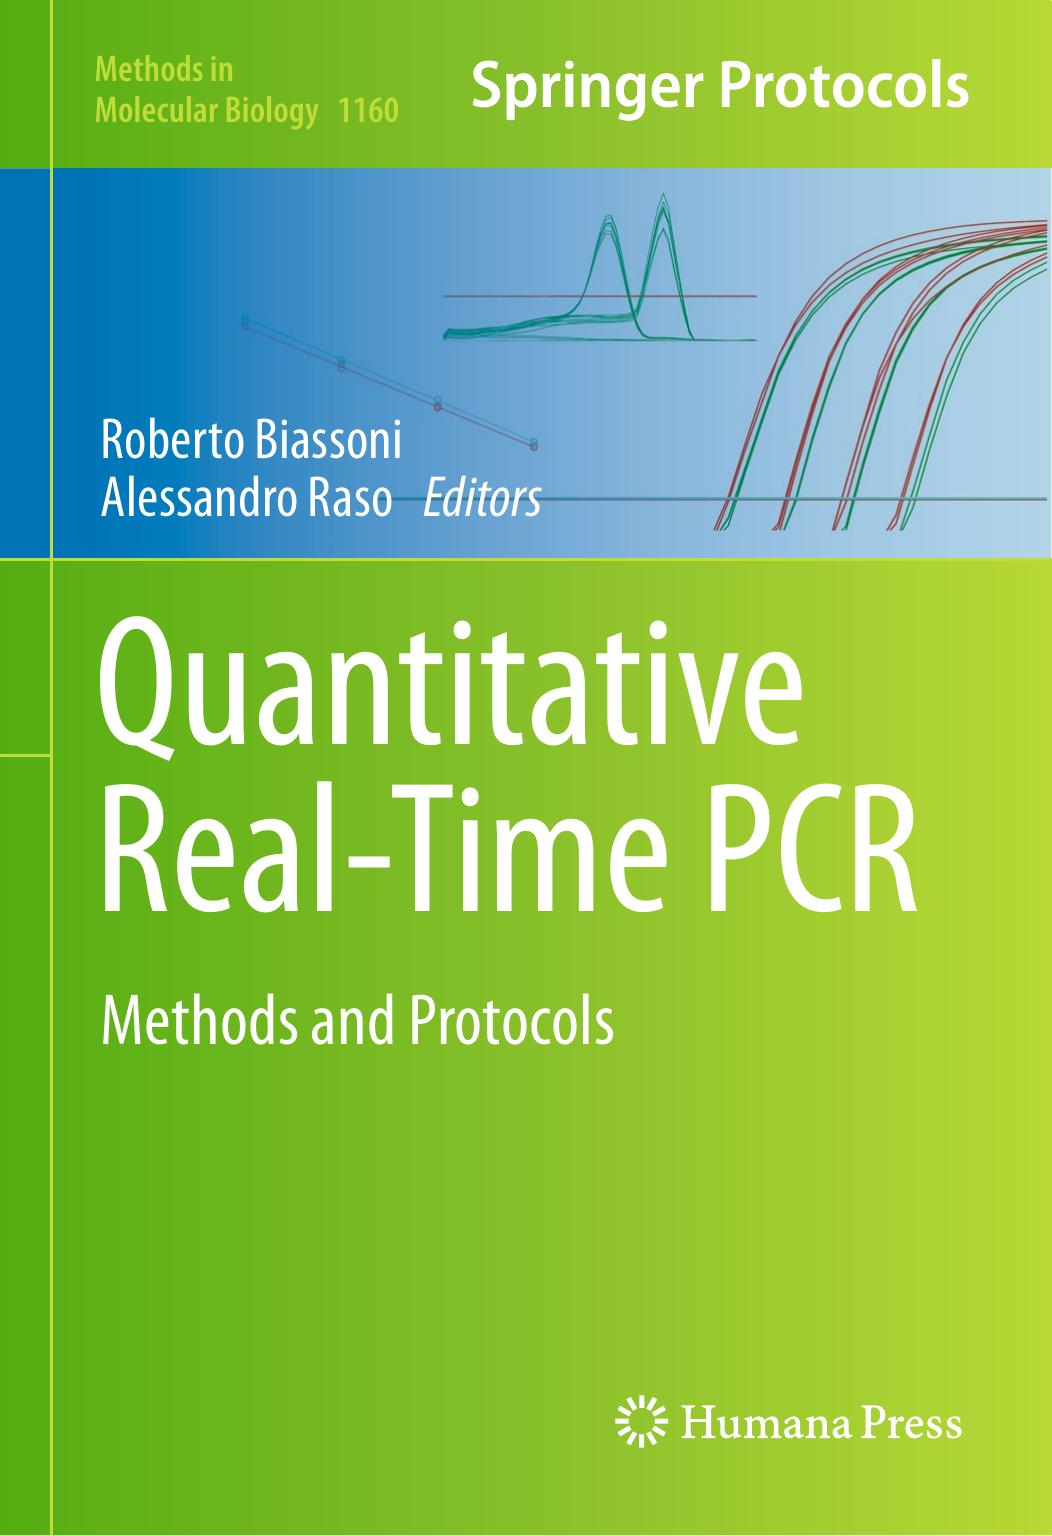 Quantitative Real-Time PCR  Methods and Protocols 2014.pdf